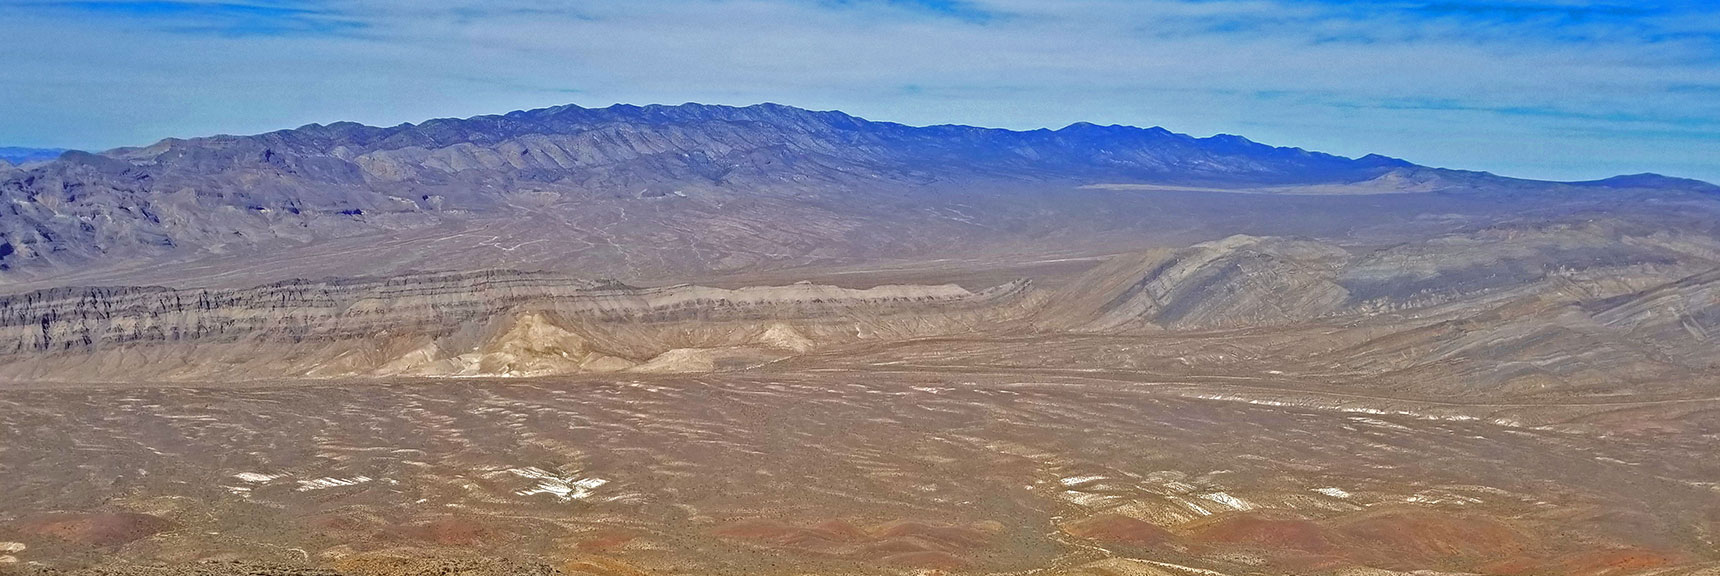 Fossil Ridge and Sheep Range North of Gass Peak Summit. | Gass Peak Grand Crossing | Desert National Wildlife Refuge to Centennial Hills Las Vegas via Gass Peak Summit by Foot